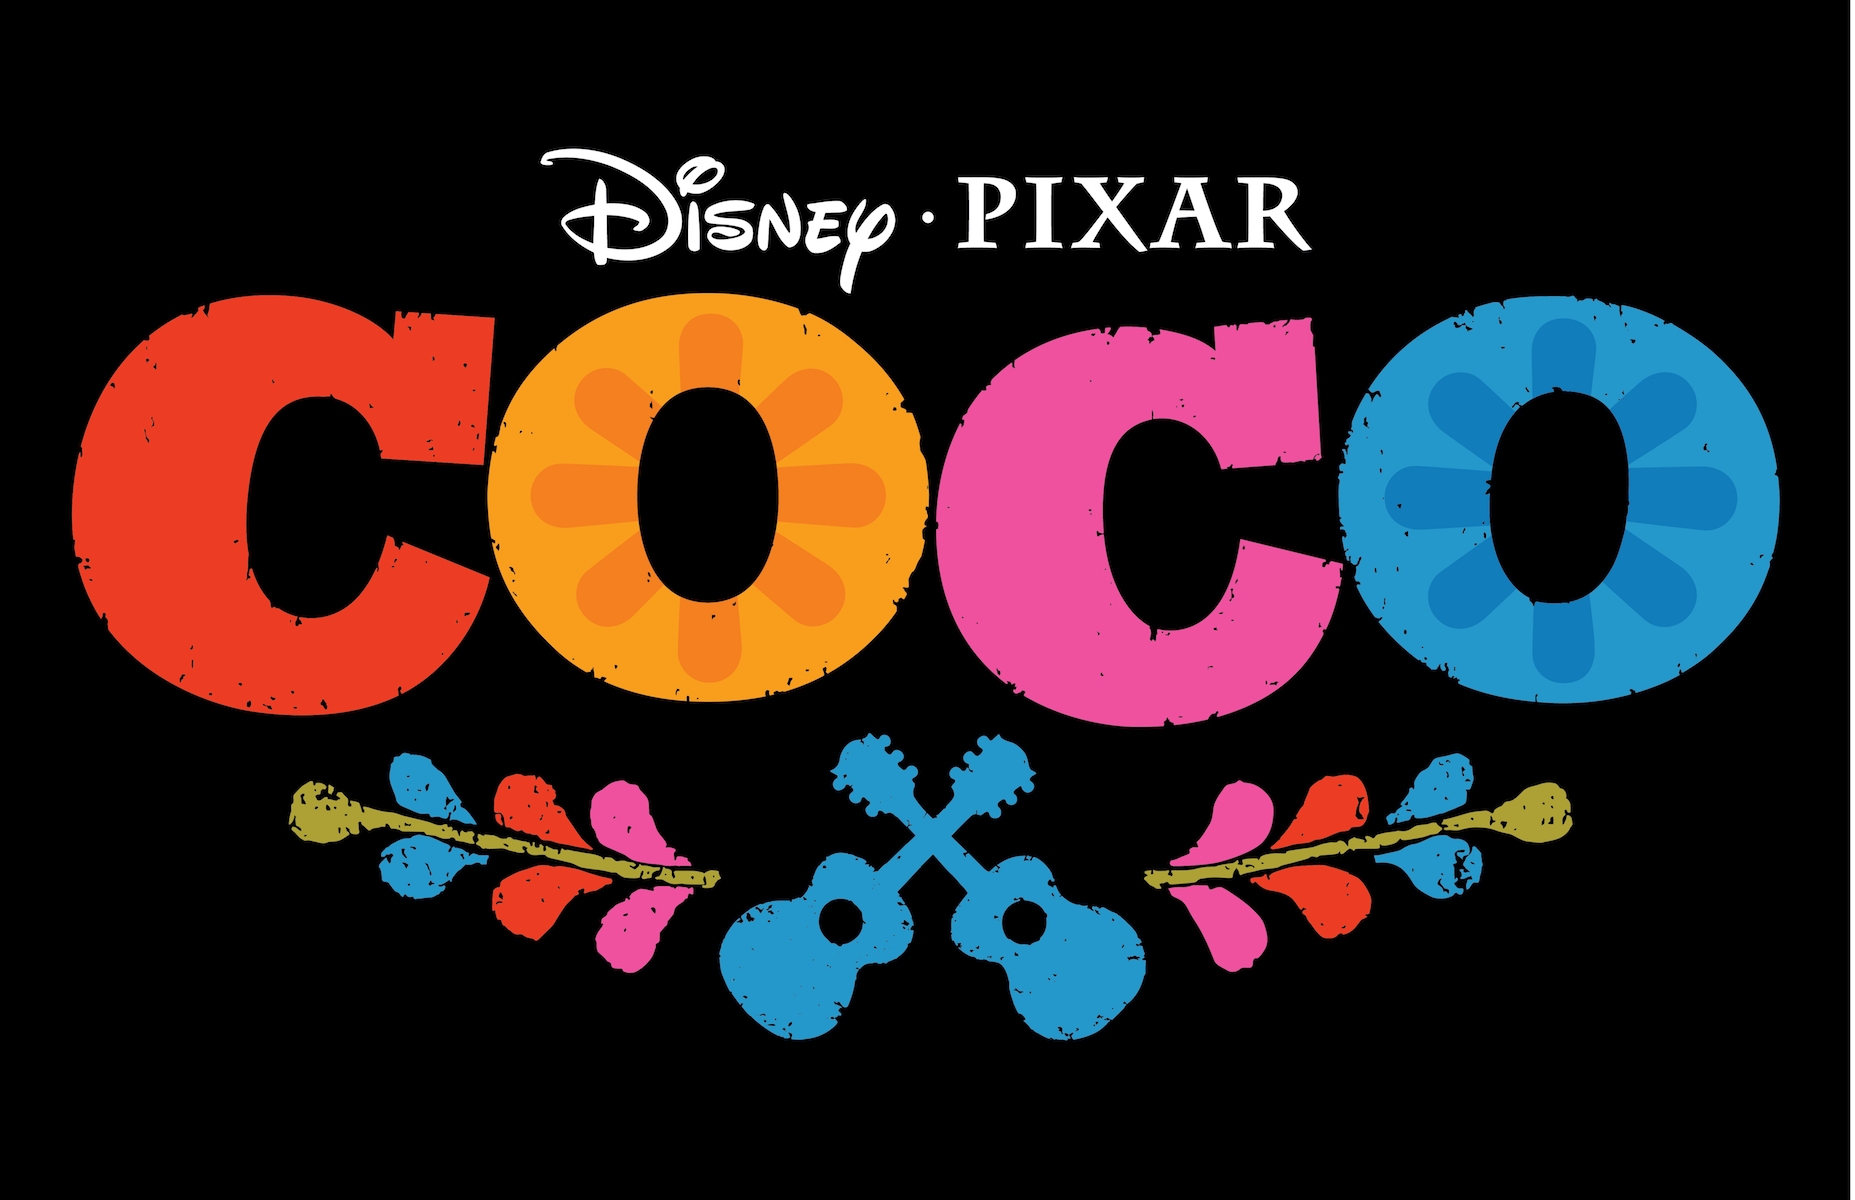 Disney-Pixar Coco